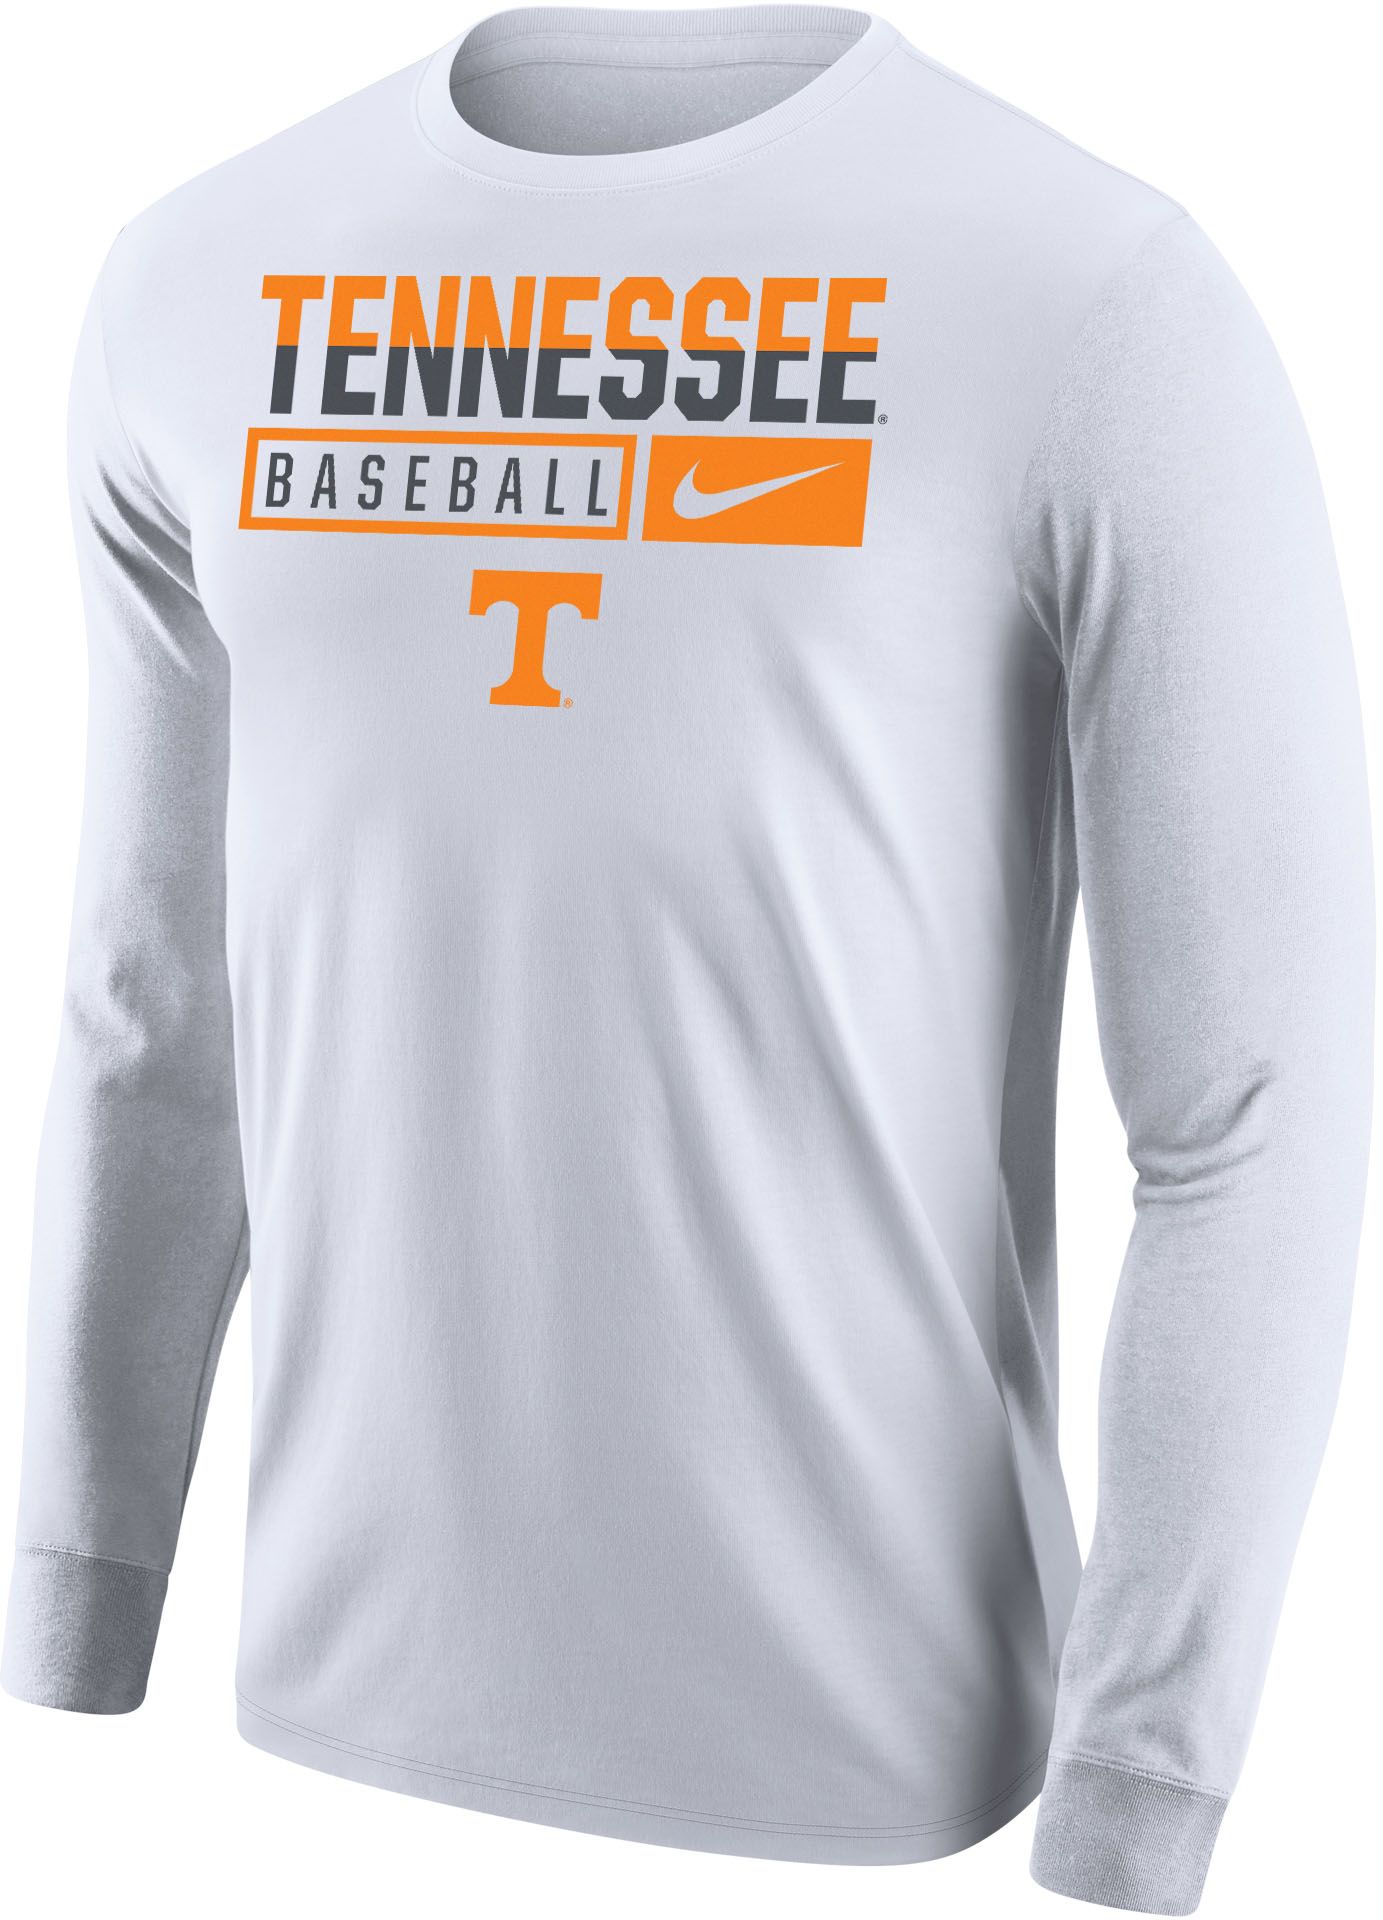 Nike / Men's Tennessee Volunteers Baseball Core Cotton Long